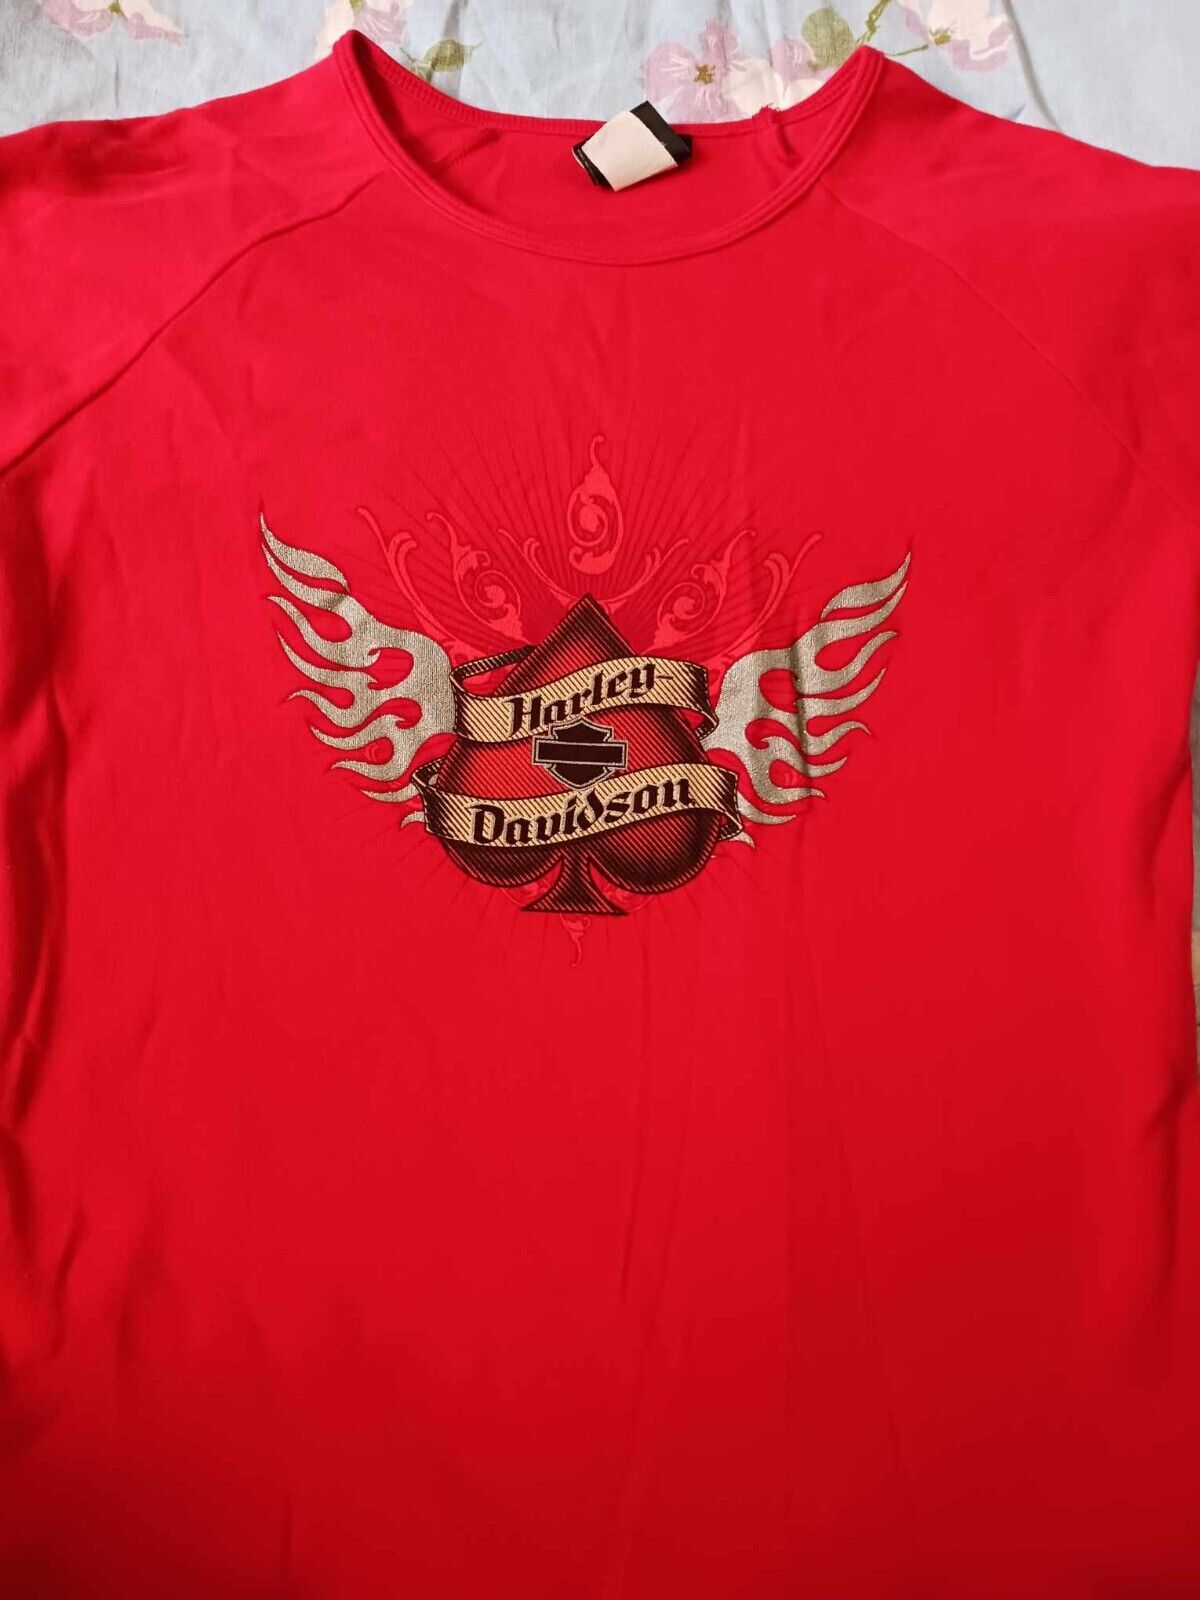 Women's Harley Davidson Shirt szLarge